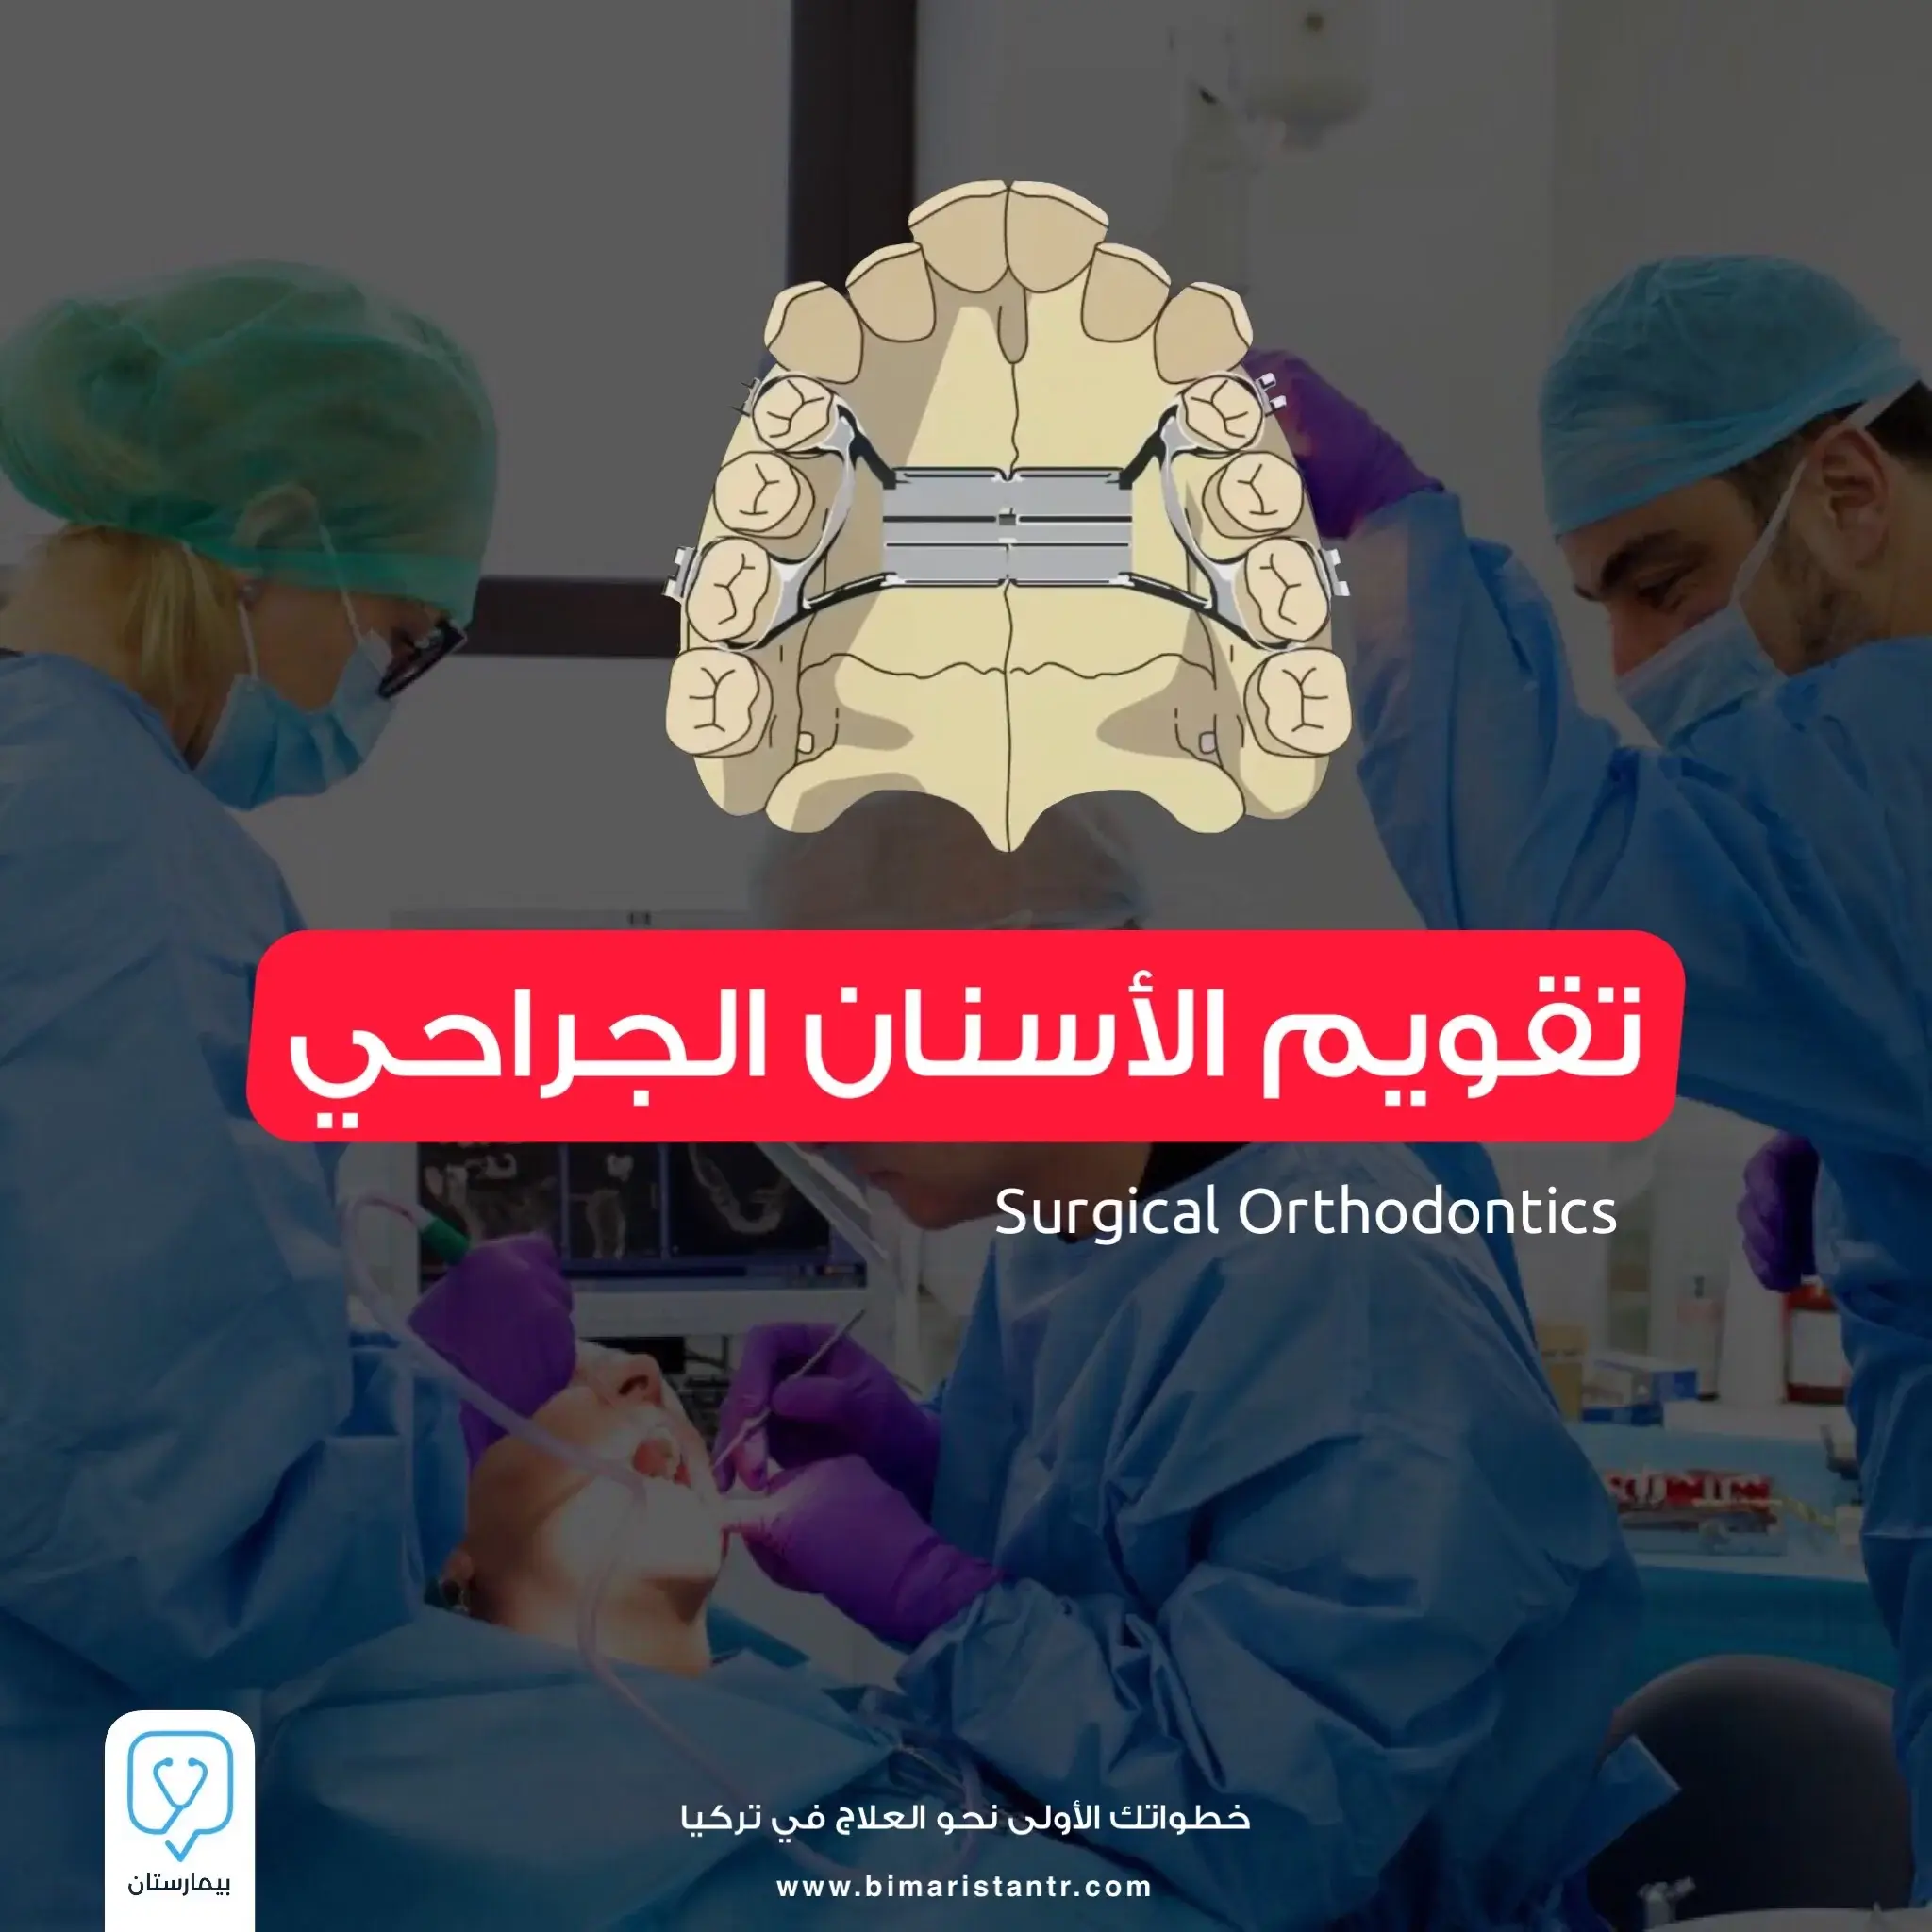 Surgical orthodontics